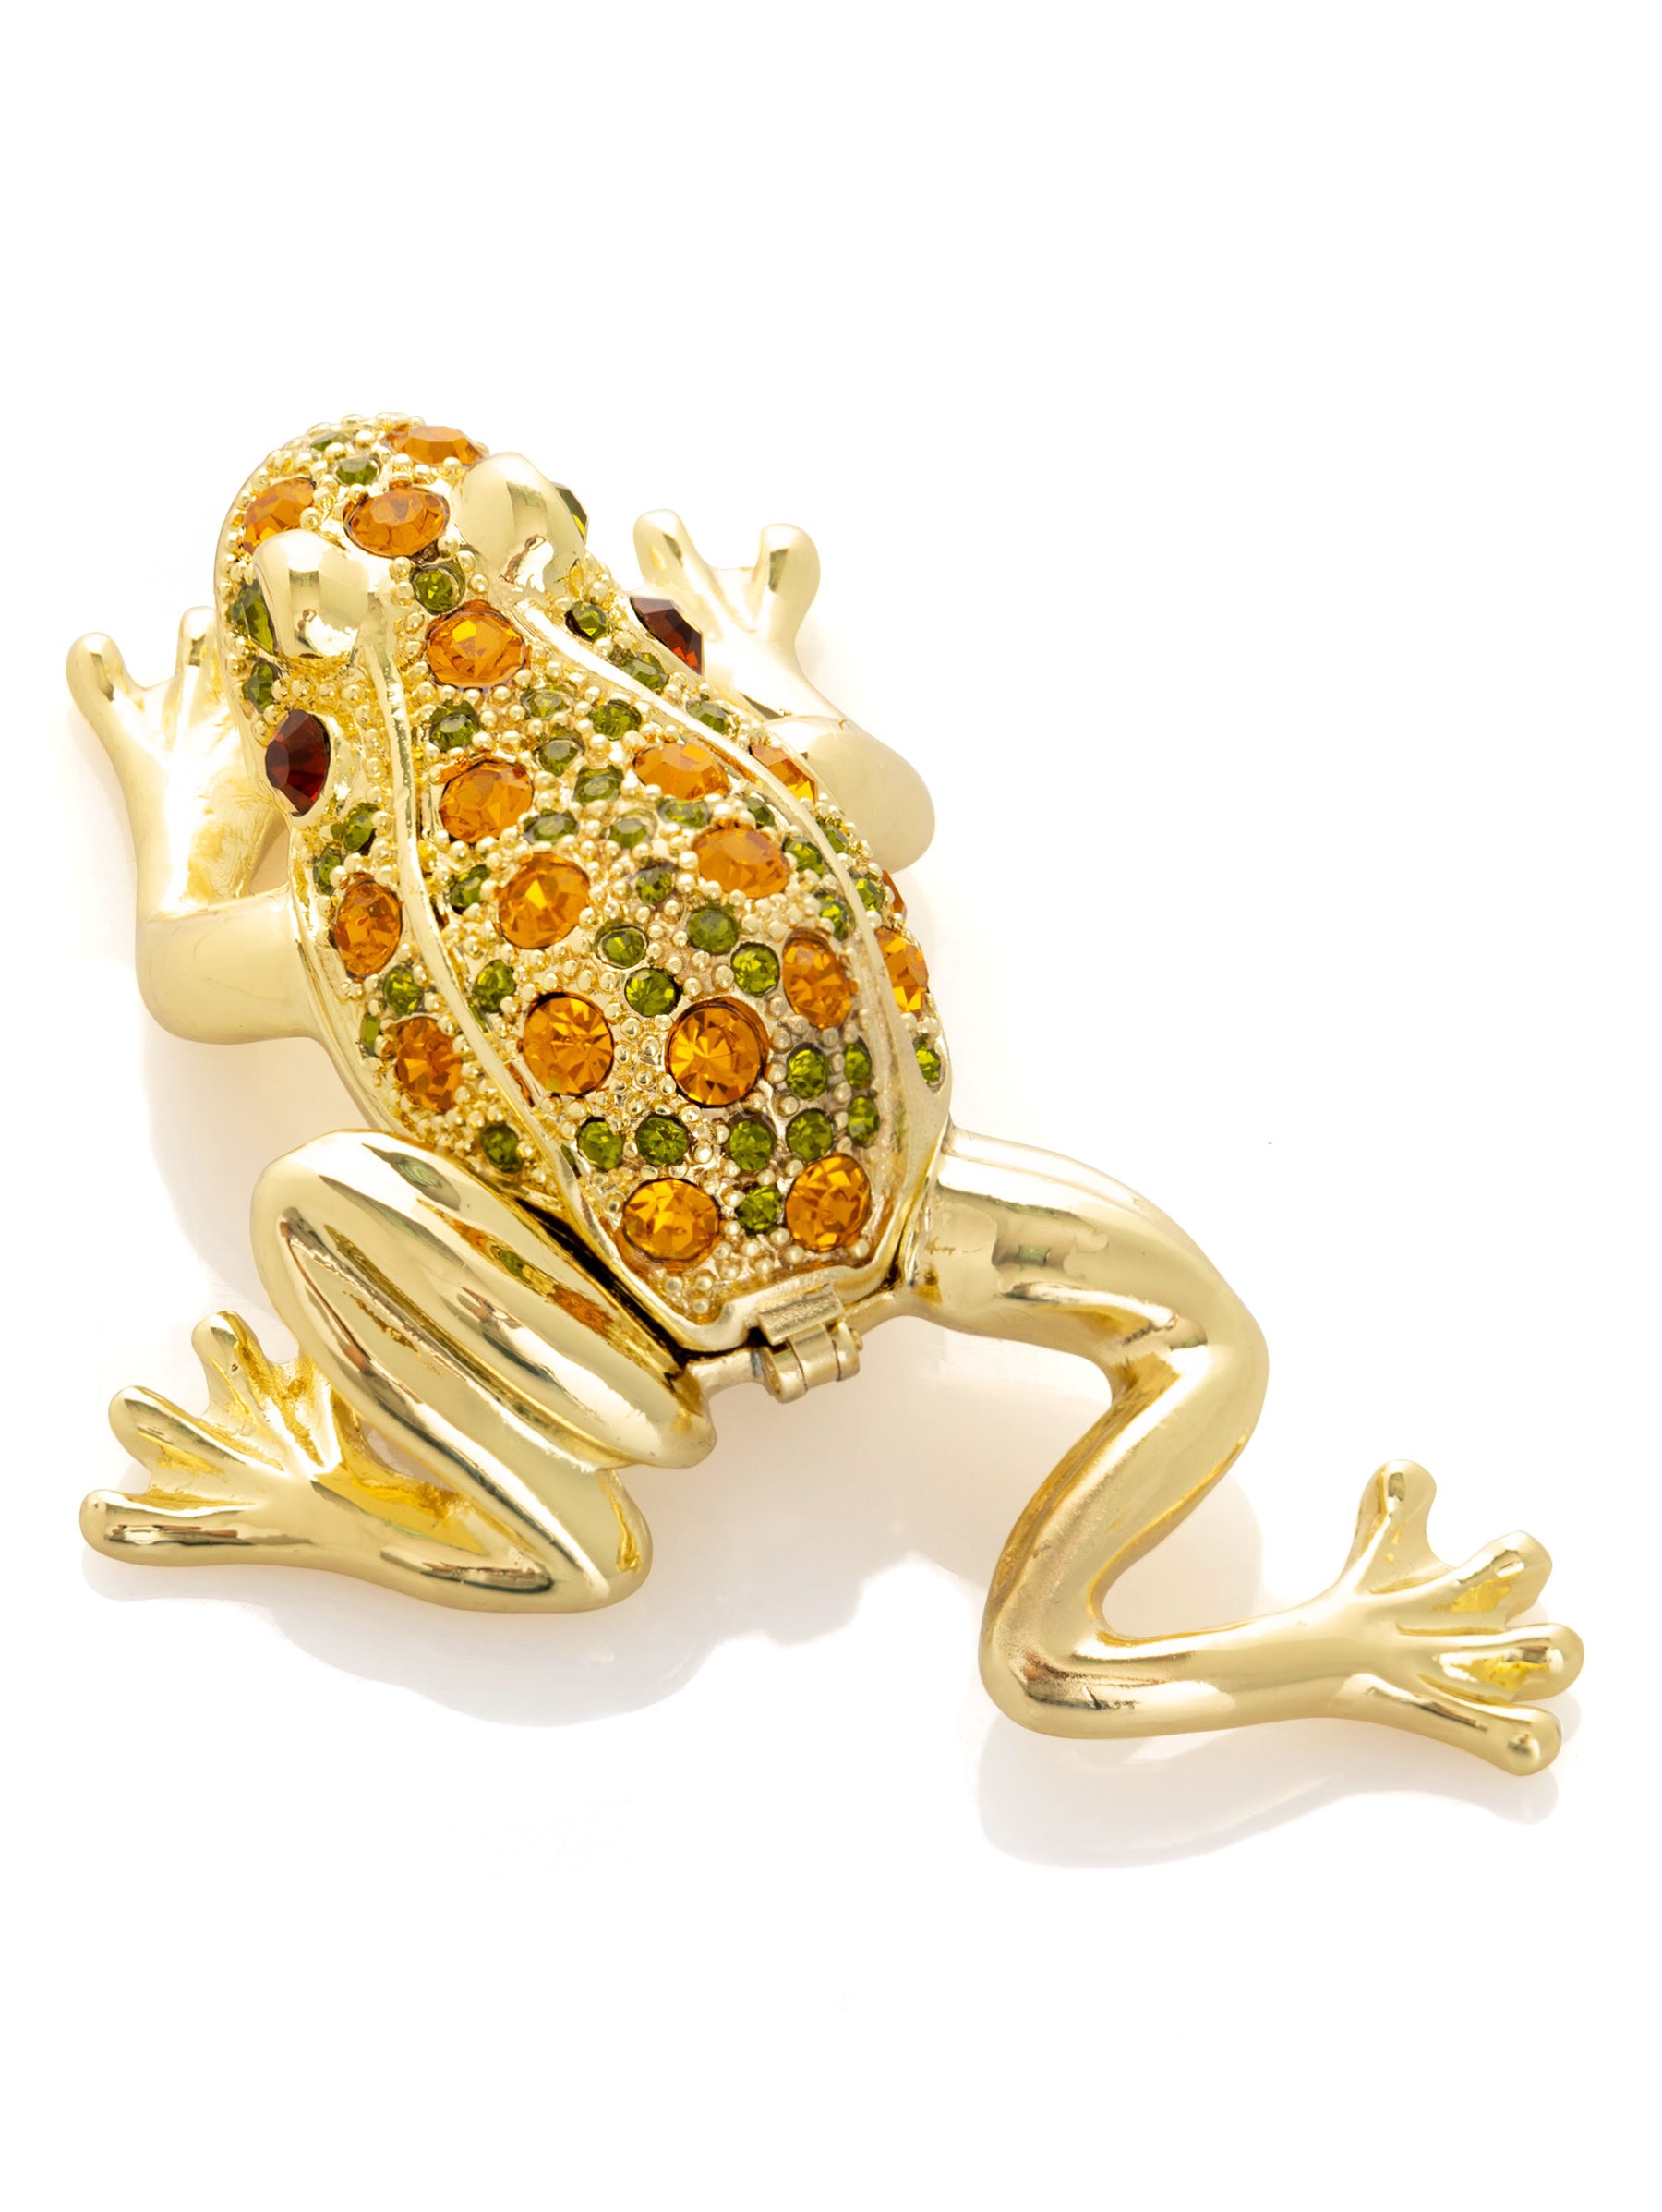 Golden Frog Trinket Box